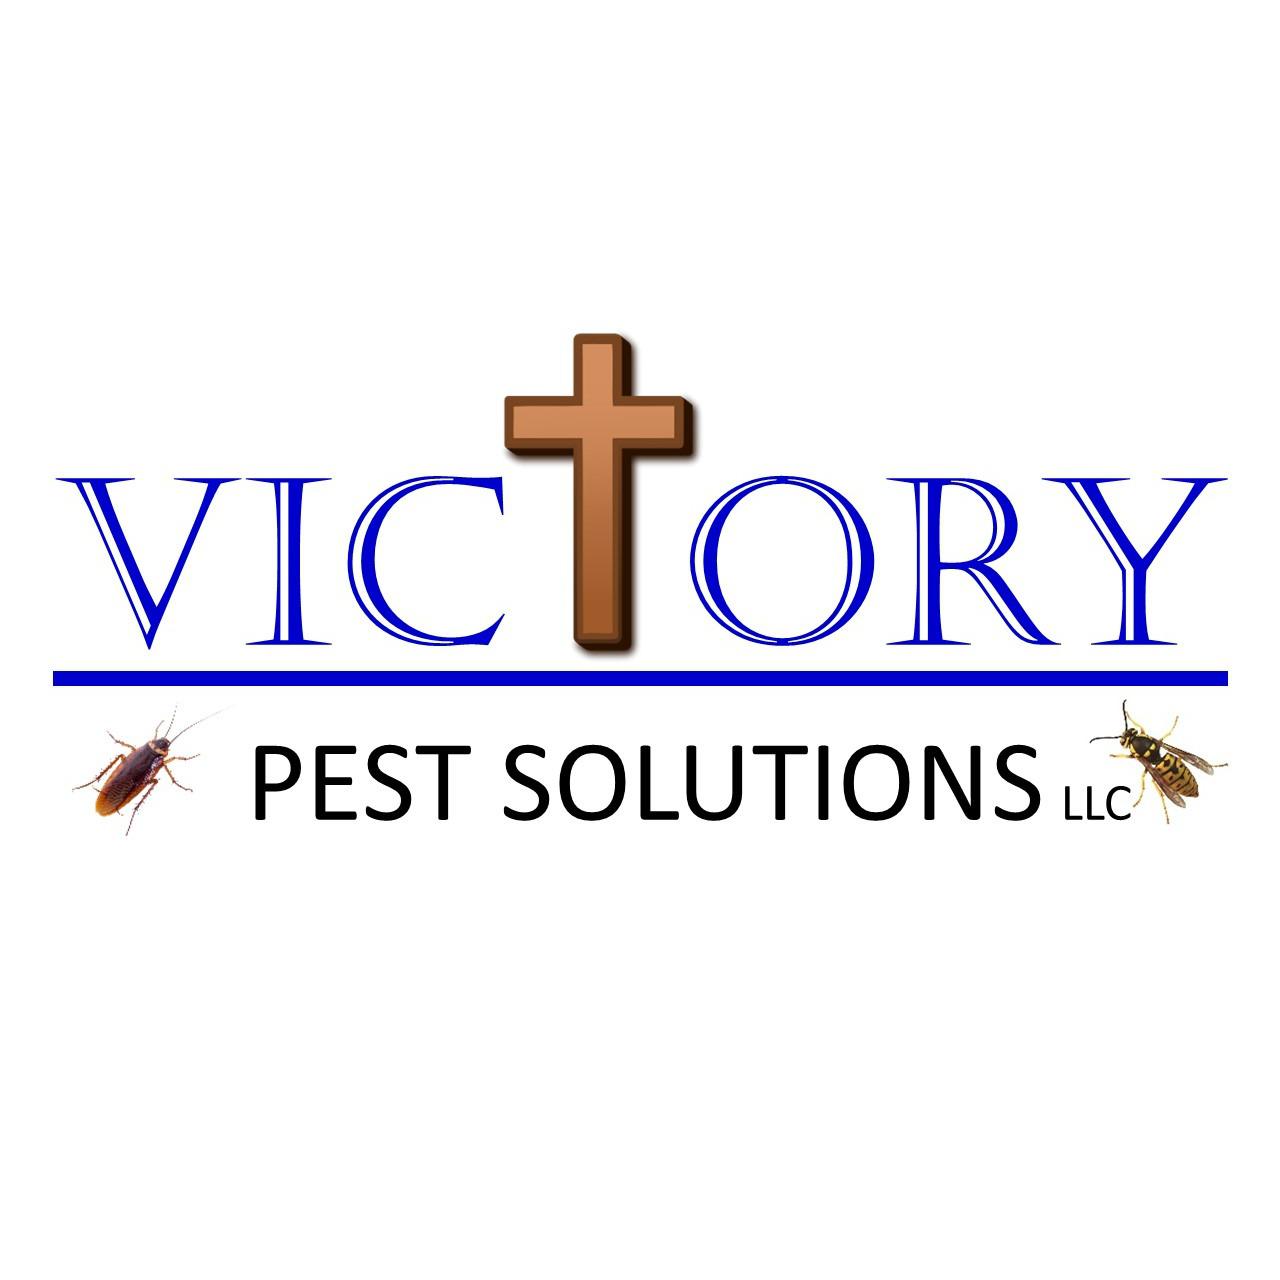 Victory Pest Solutions LLC